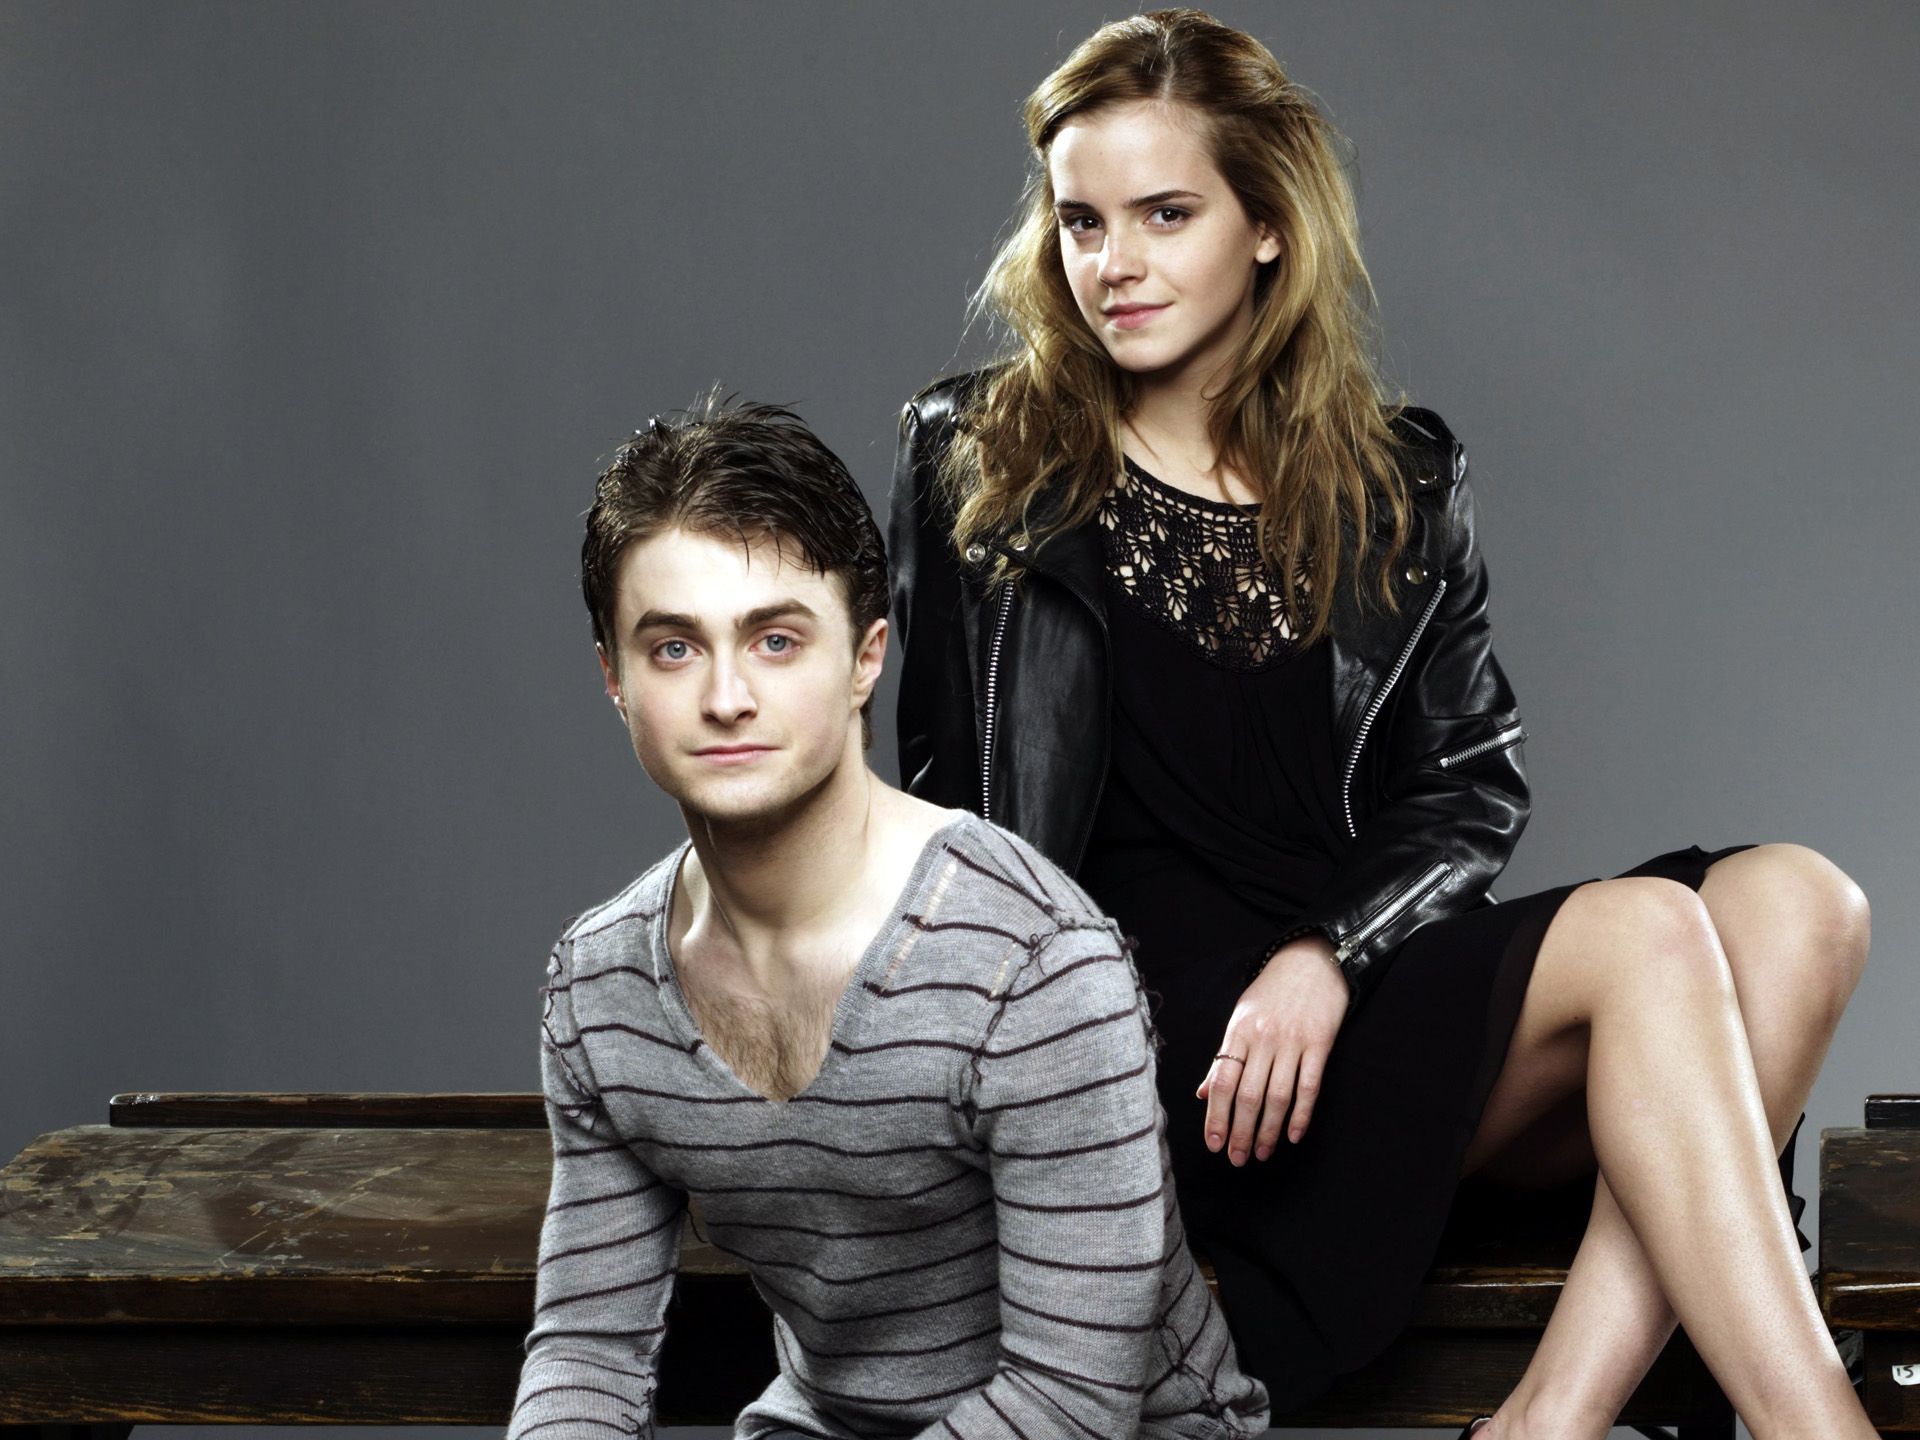 Daniel Radcliffe&Emma Watson Wallpaper: Emma Watson with Daniel Radcliffe. Daniel radcliffe, Emma watson movies, Emma watson image